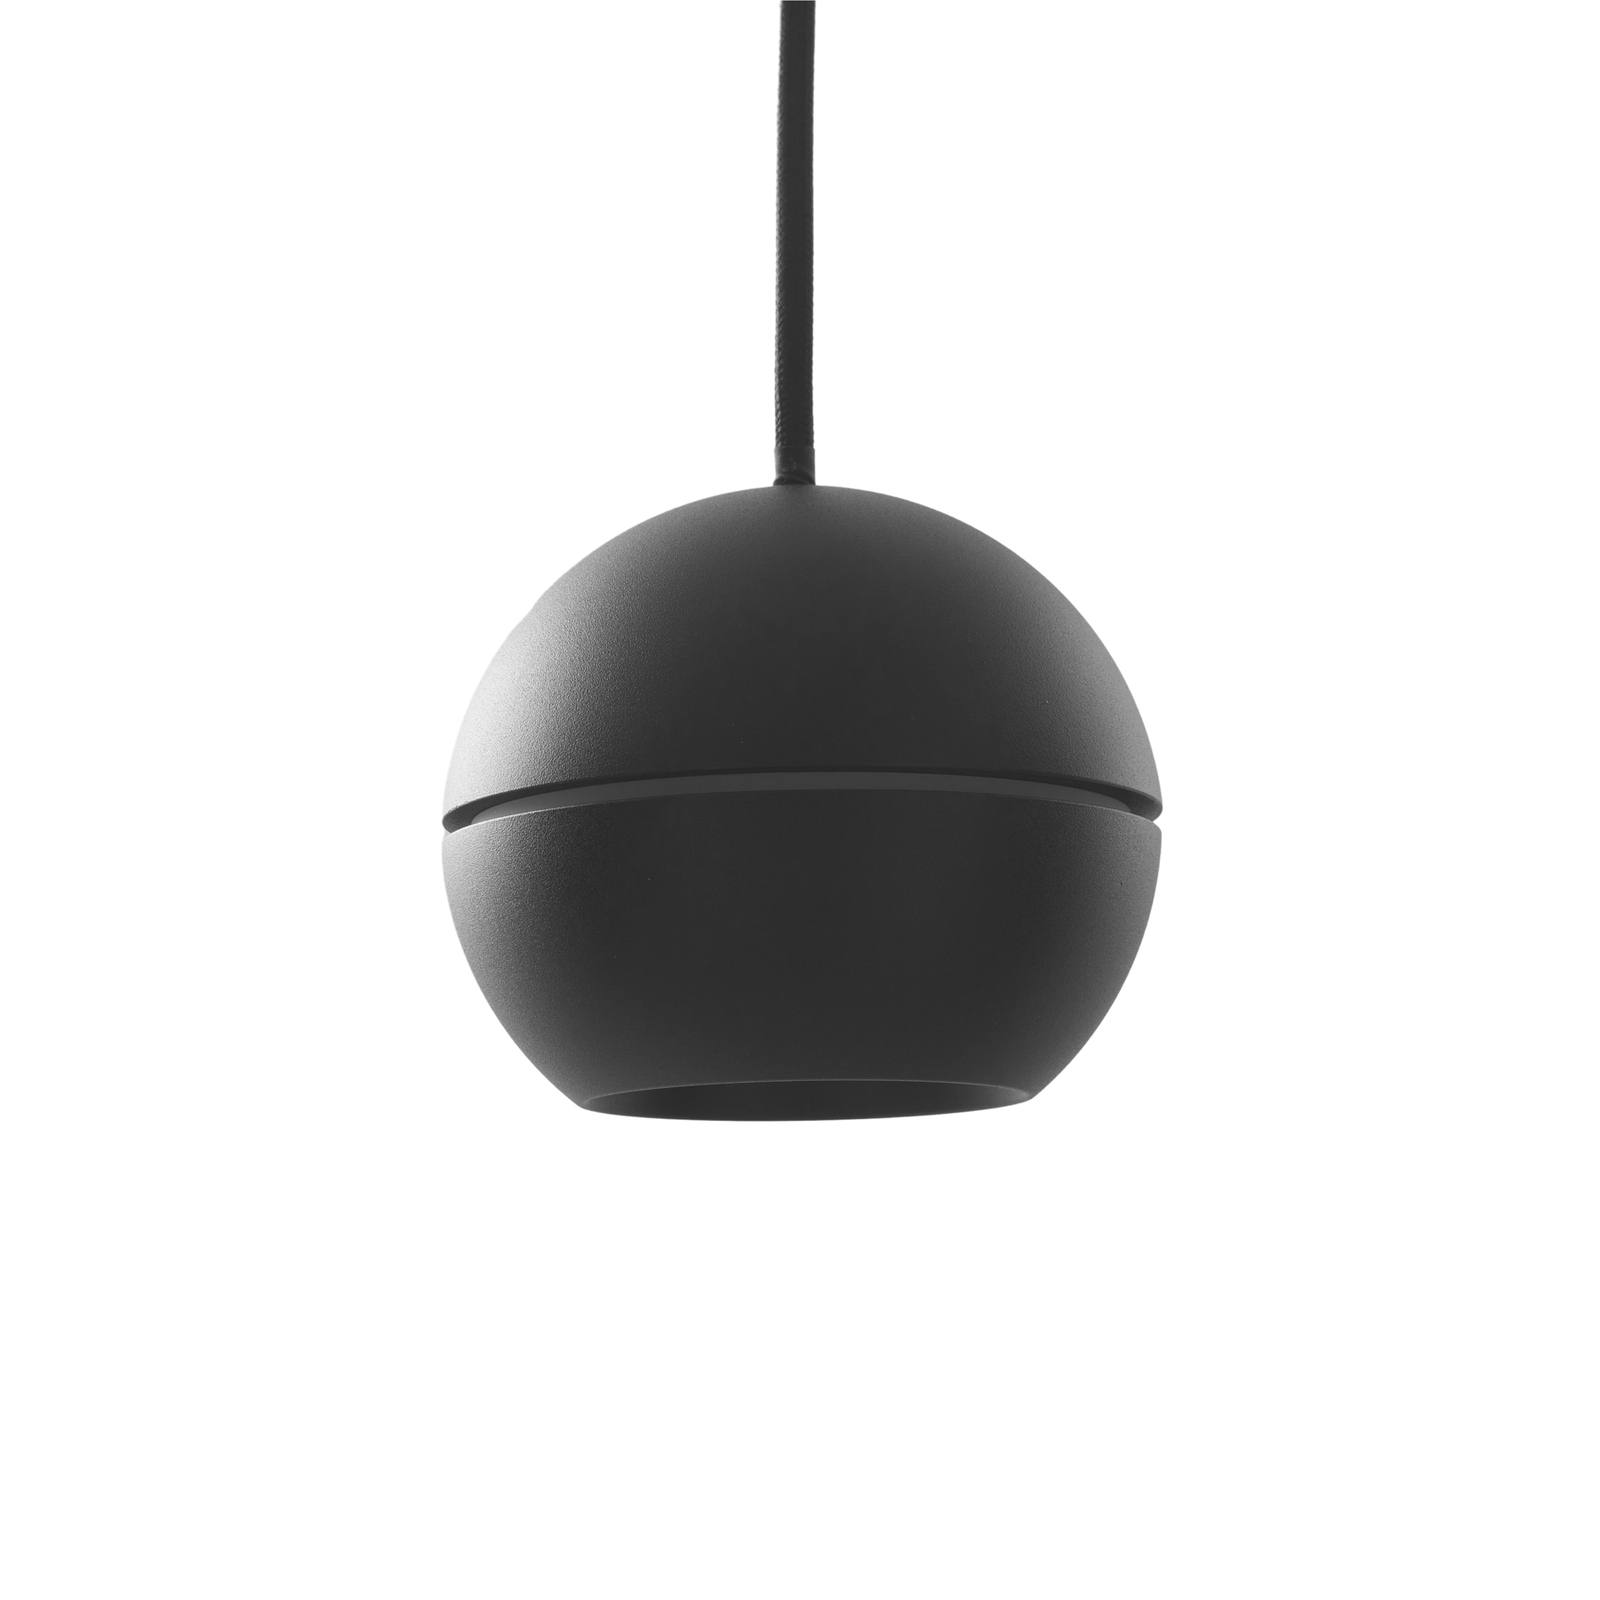 Lucande LED pendant light Plarion, black, aluminium, Ø 9 cm